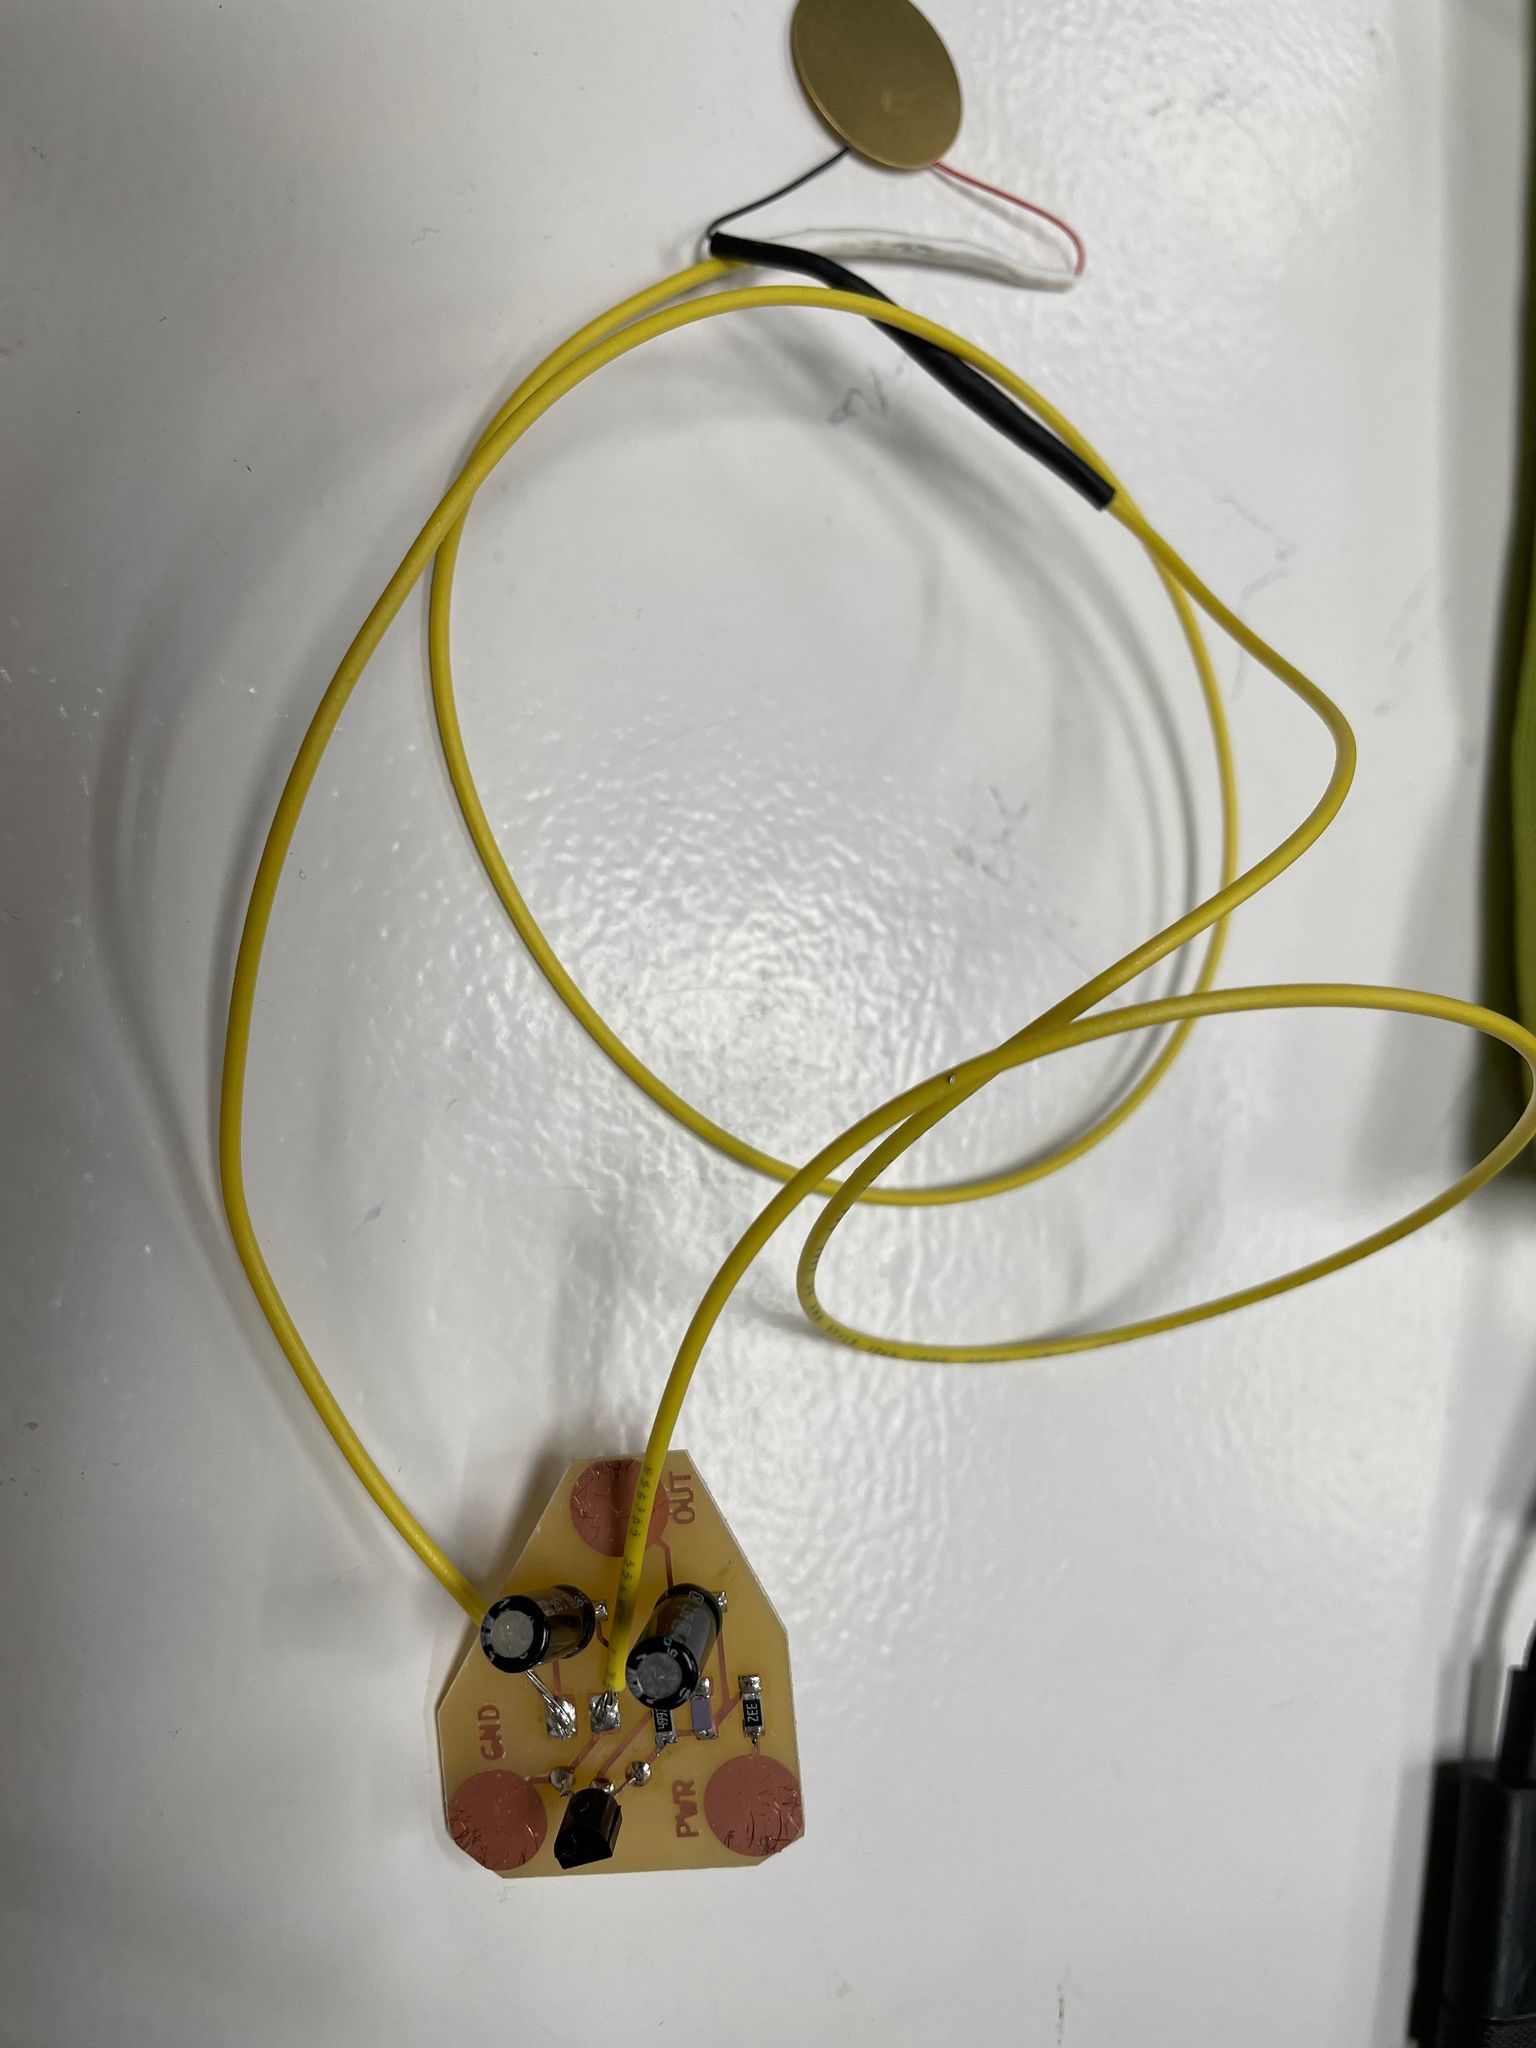 Transistor preamp circuit